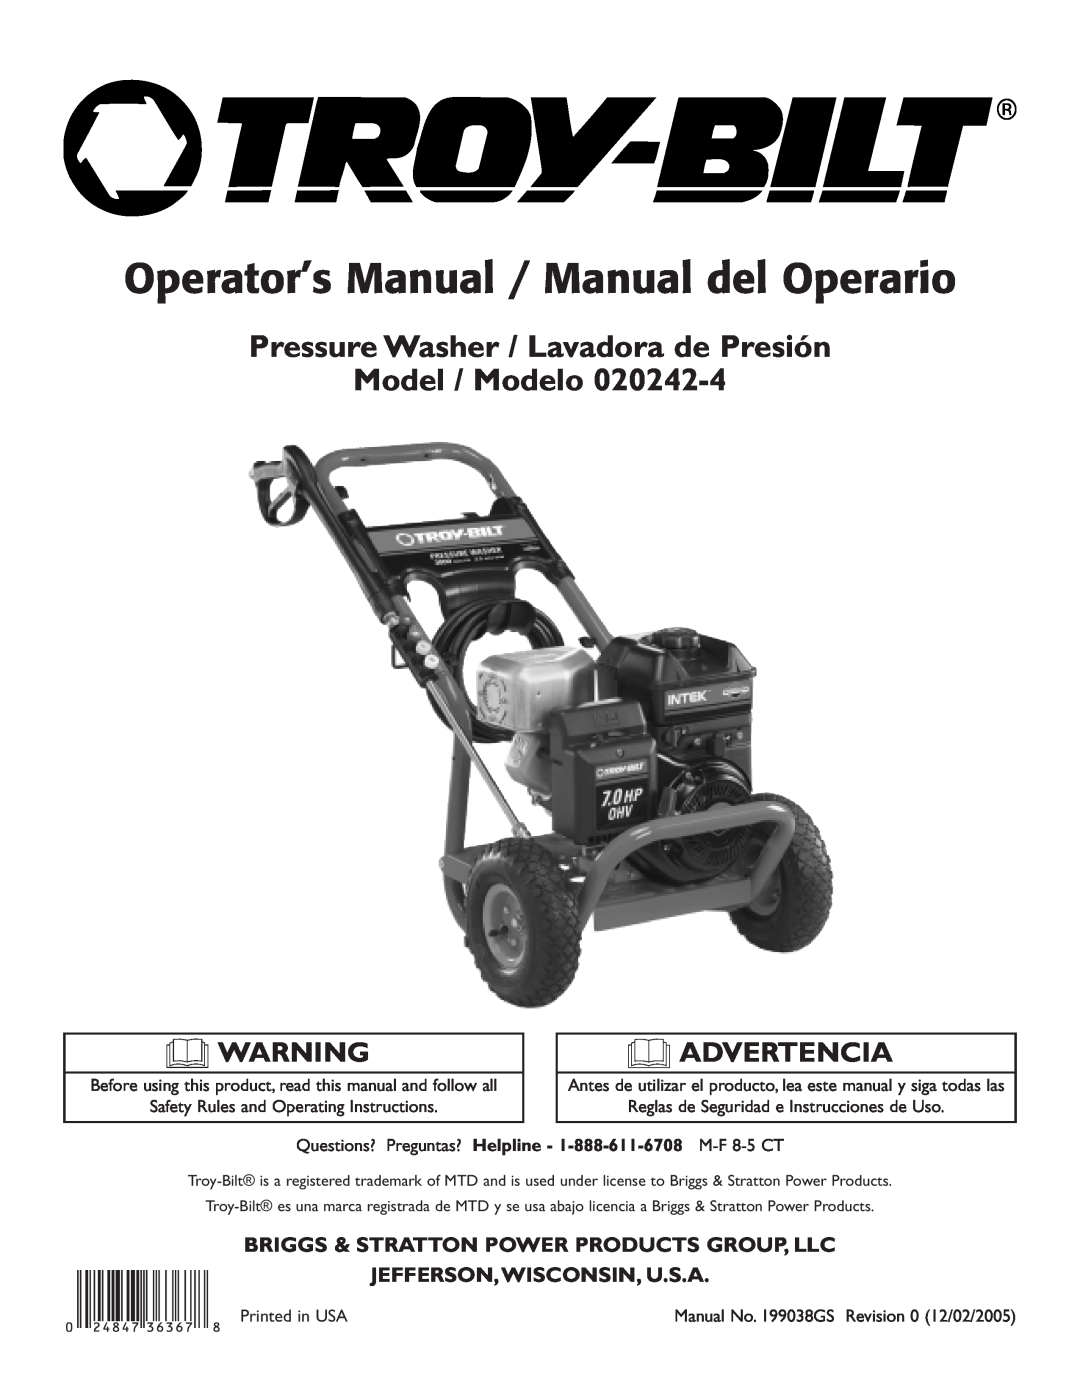 Troy-Bilt 020242-4 manual Pressure Washer / Lavadora de Presión, Model / Modelo, Jefferson,Wisconsin, U.S.A, Advertencia 